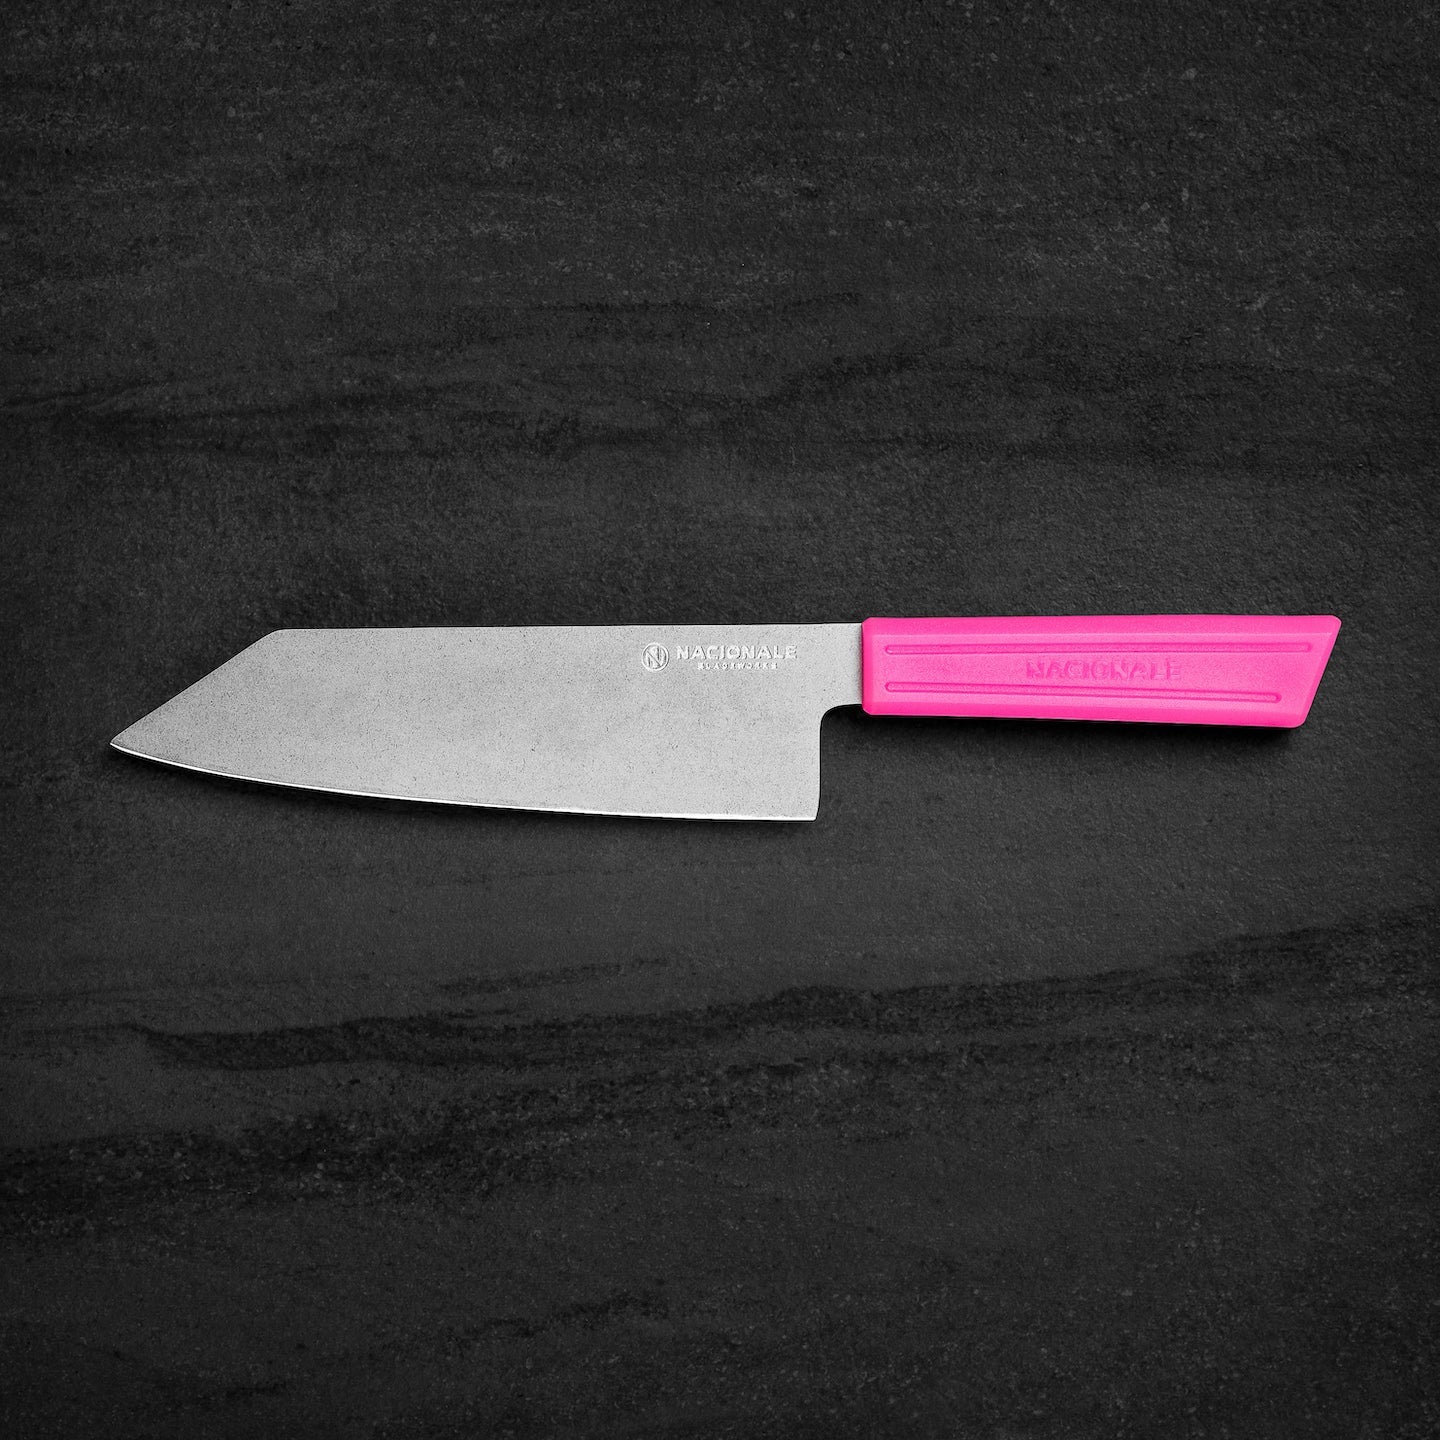 180mm Bunka. Pink Glow in the Dark Recycled Plastic Skateboard Material Handle - Nacionale Bladeworks